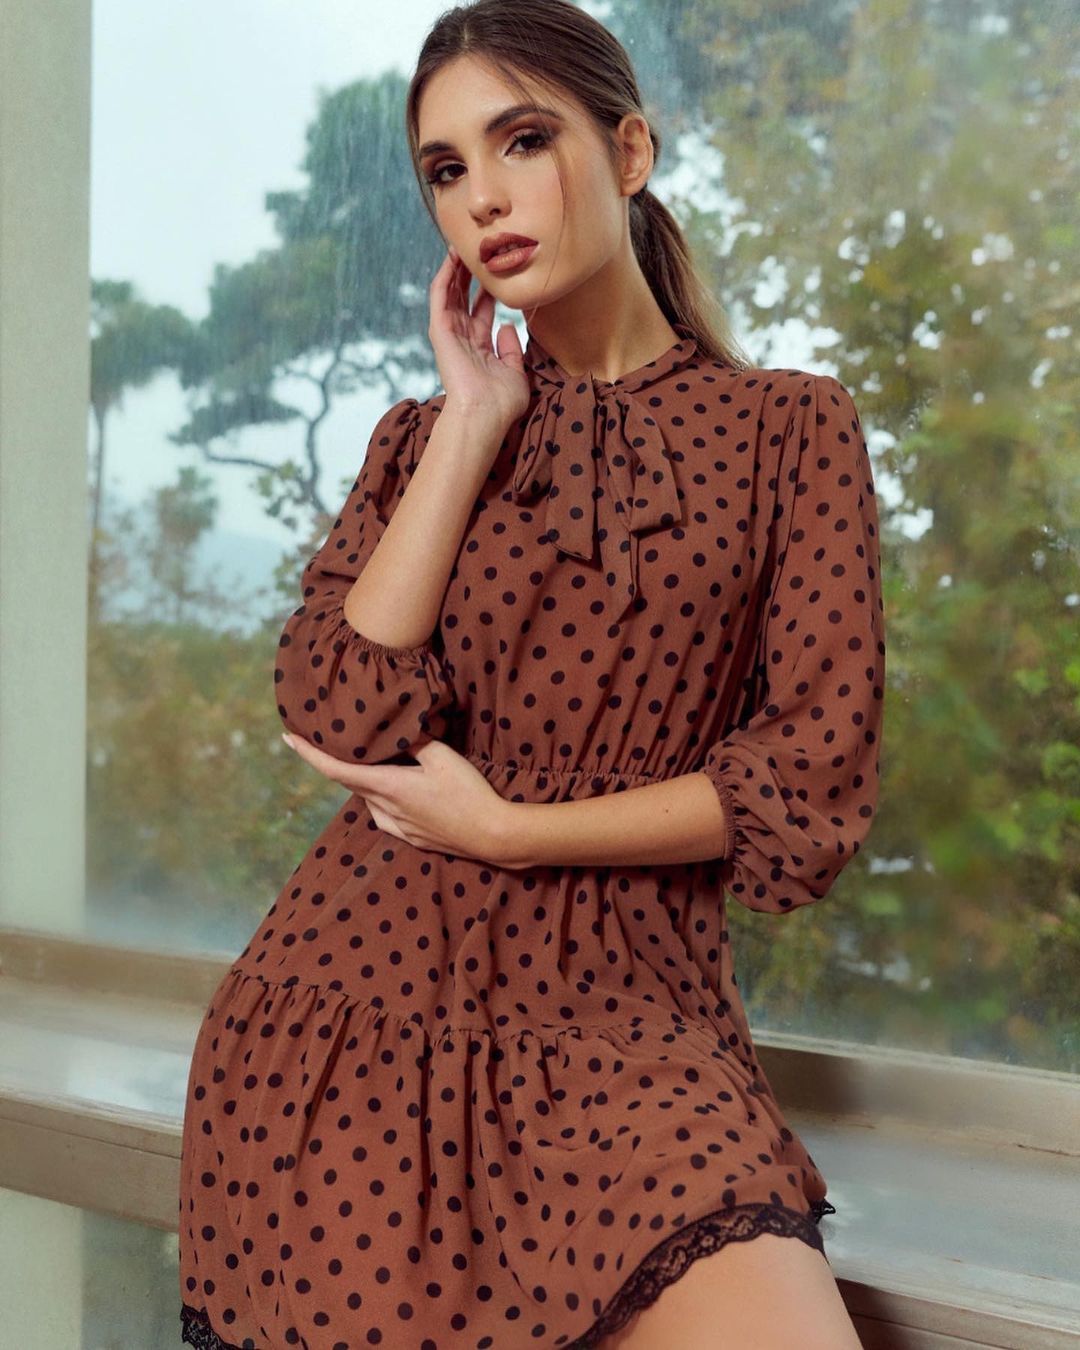 Italian model Valeria Sarnataro in Black Dotted Brown Dress During Photoshoot 11/19/2021 2